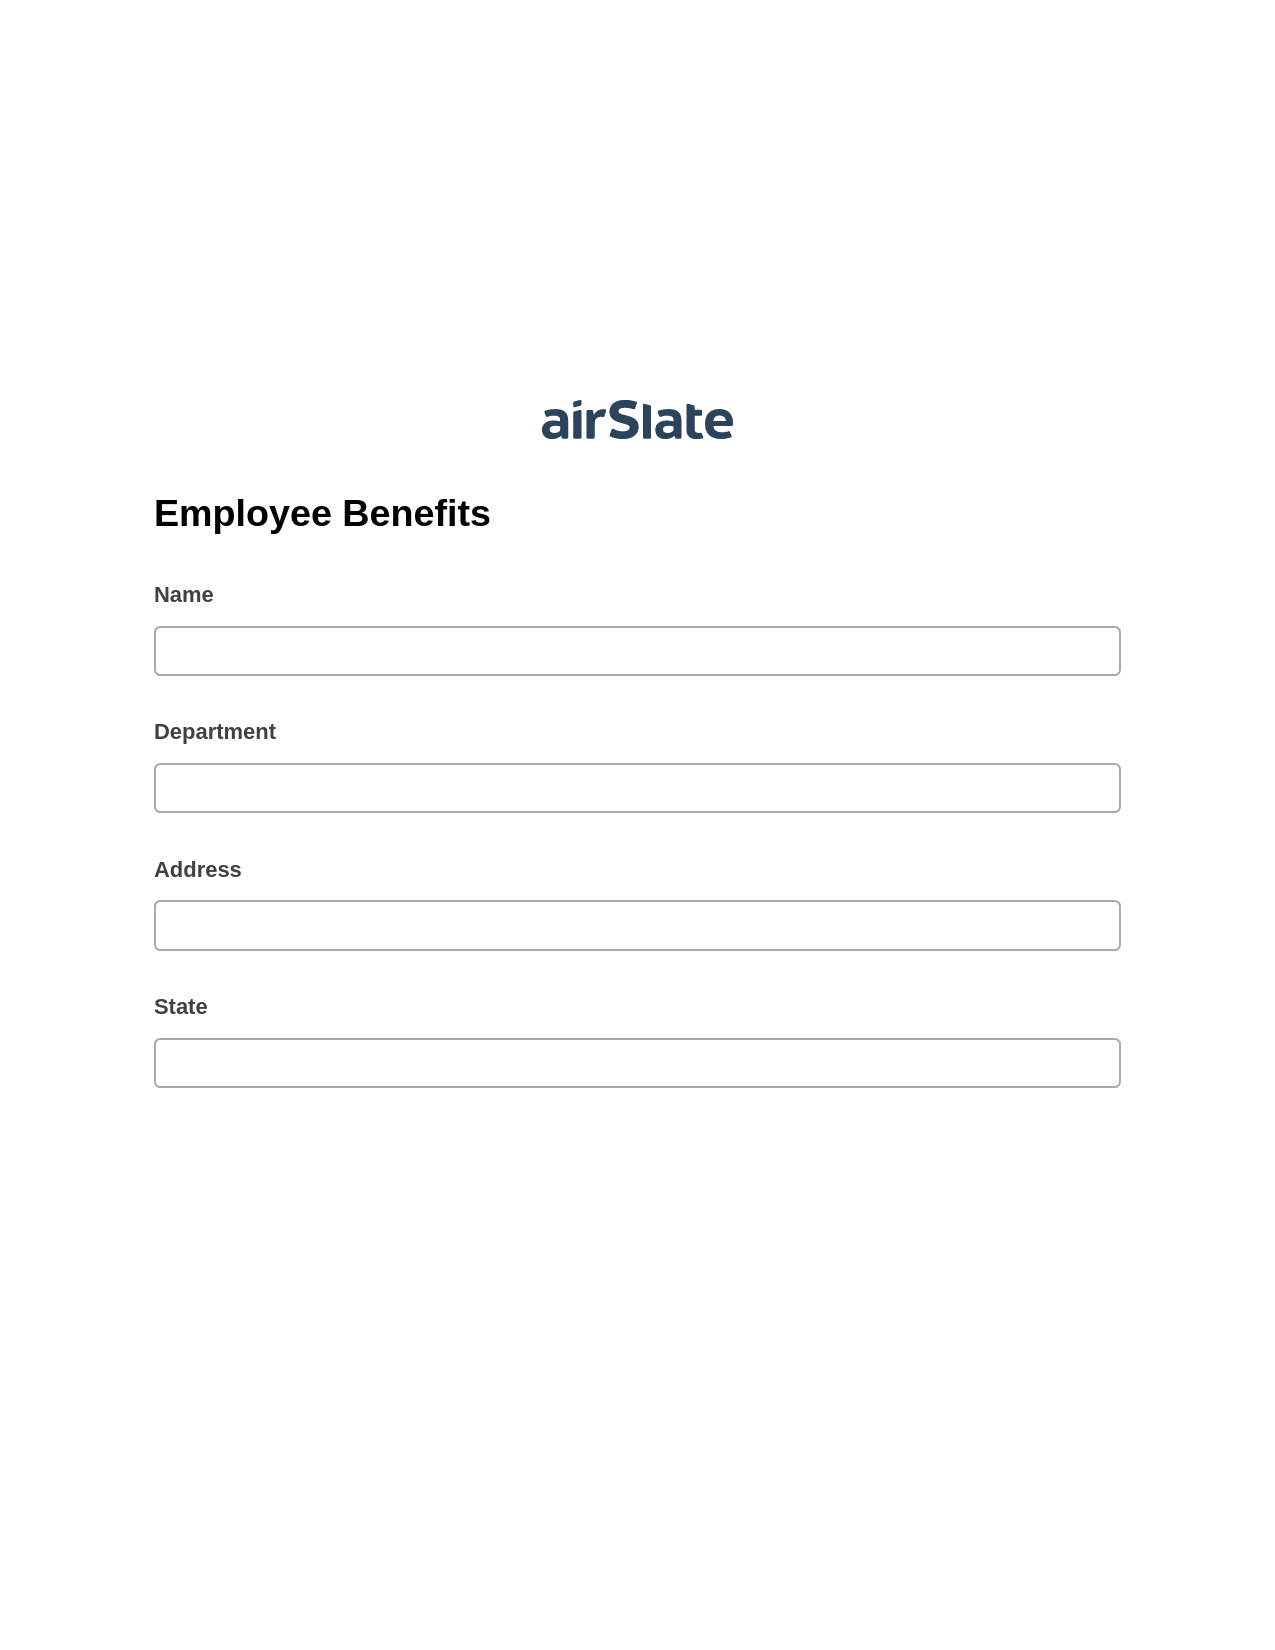 Multirole Employee Benefits Pre-fill from CSV File Bot, Create MS Dynamics 365 Records Bot, Google Drive Bot